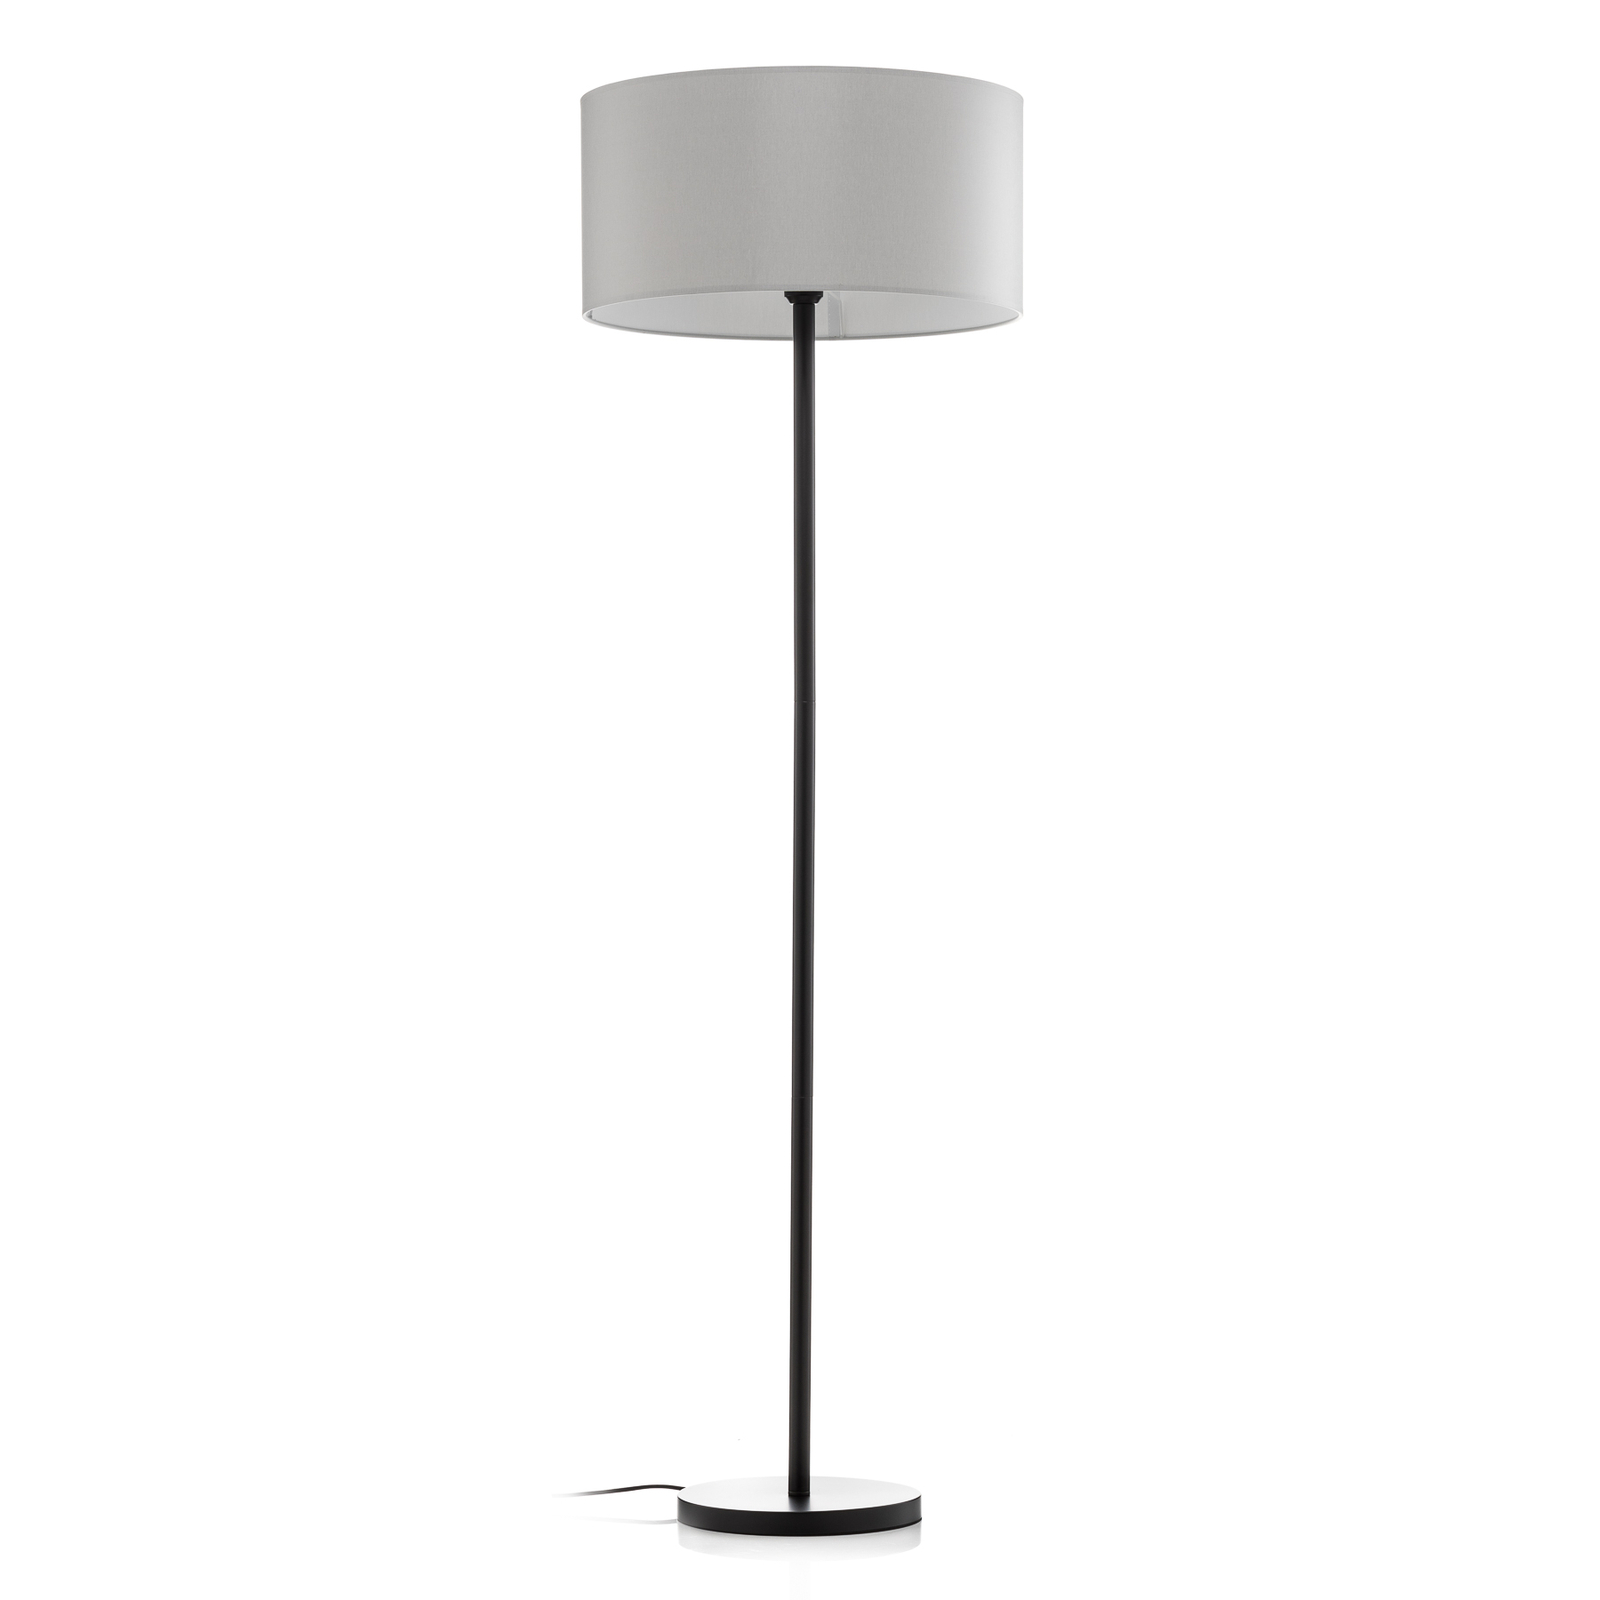 Maarit floor lamp, fabric lampshade, grey/black